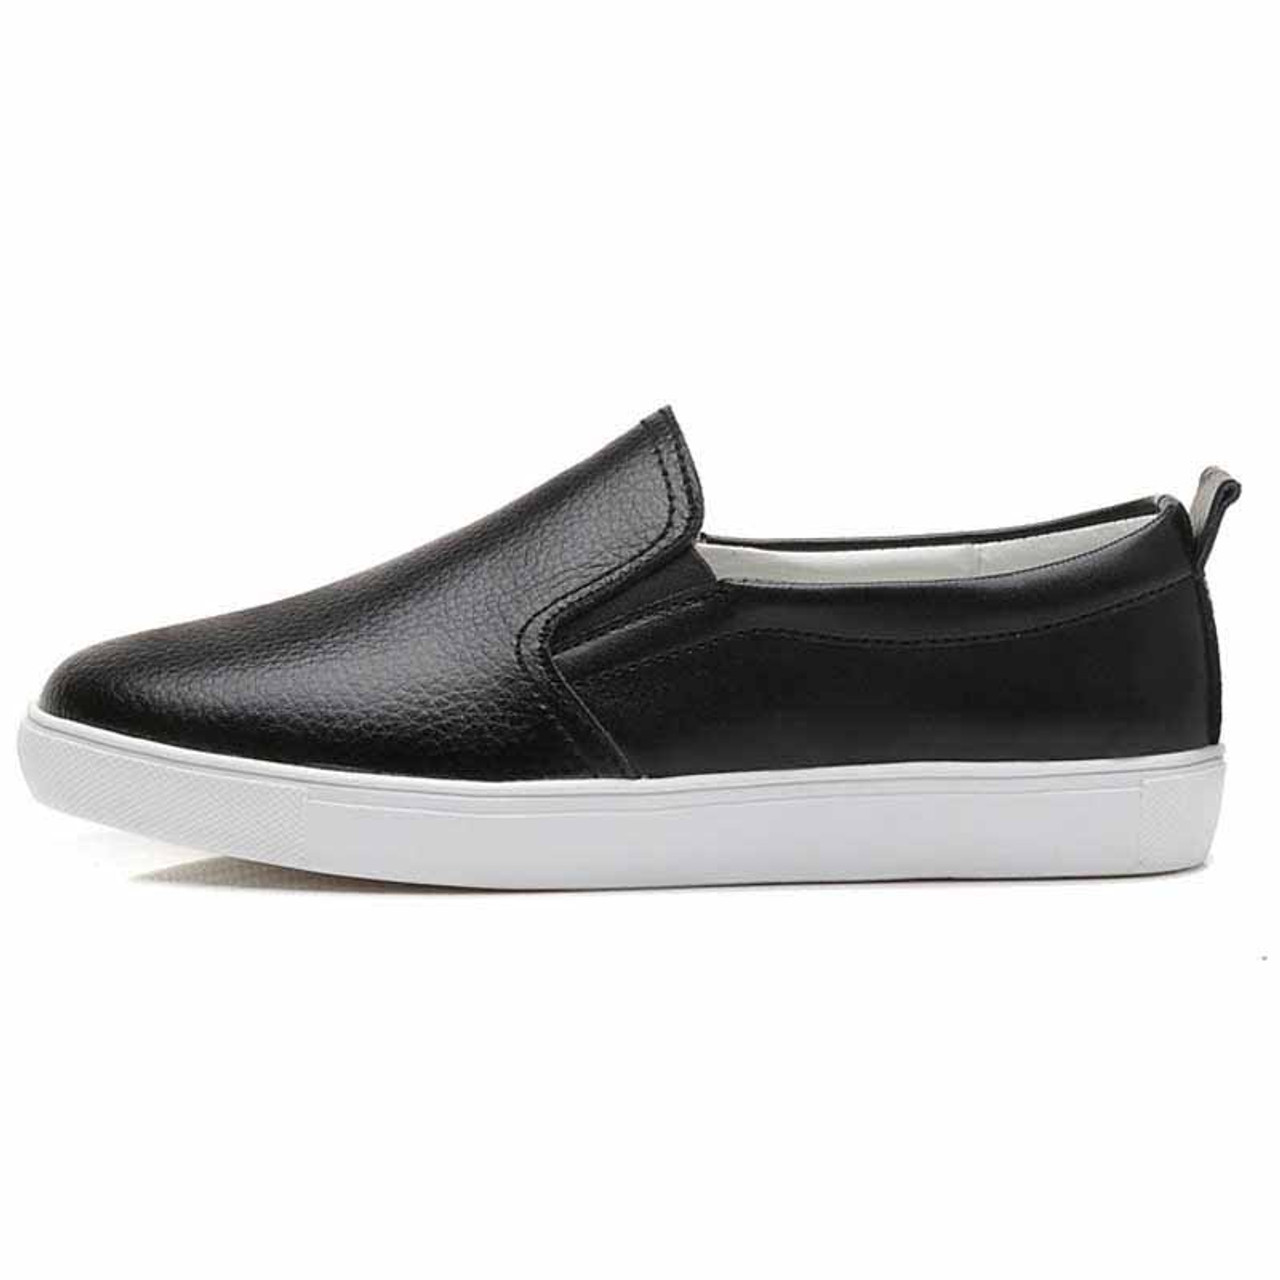 Black plain color casual slip on shoe sneaker | Womens sneakers shoes ...